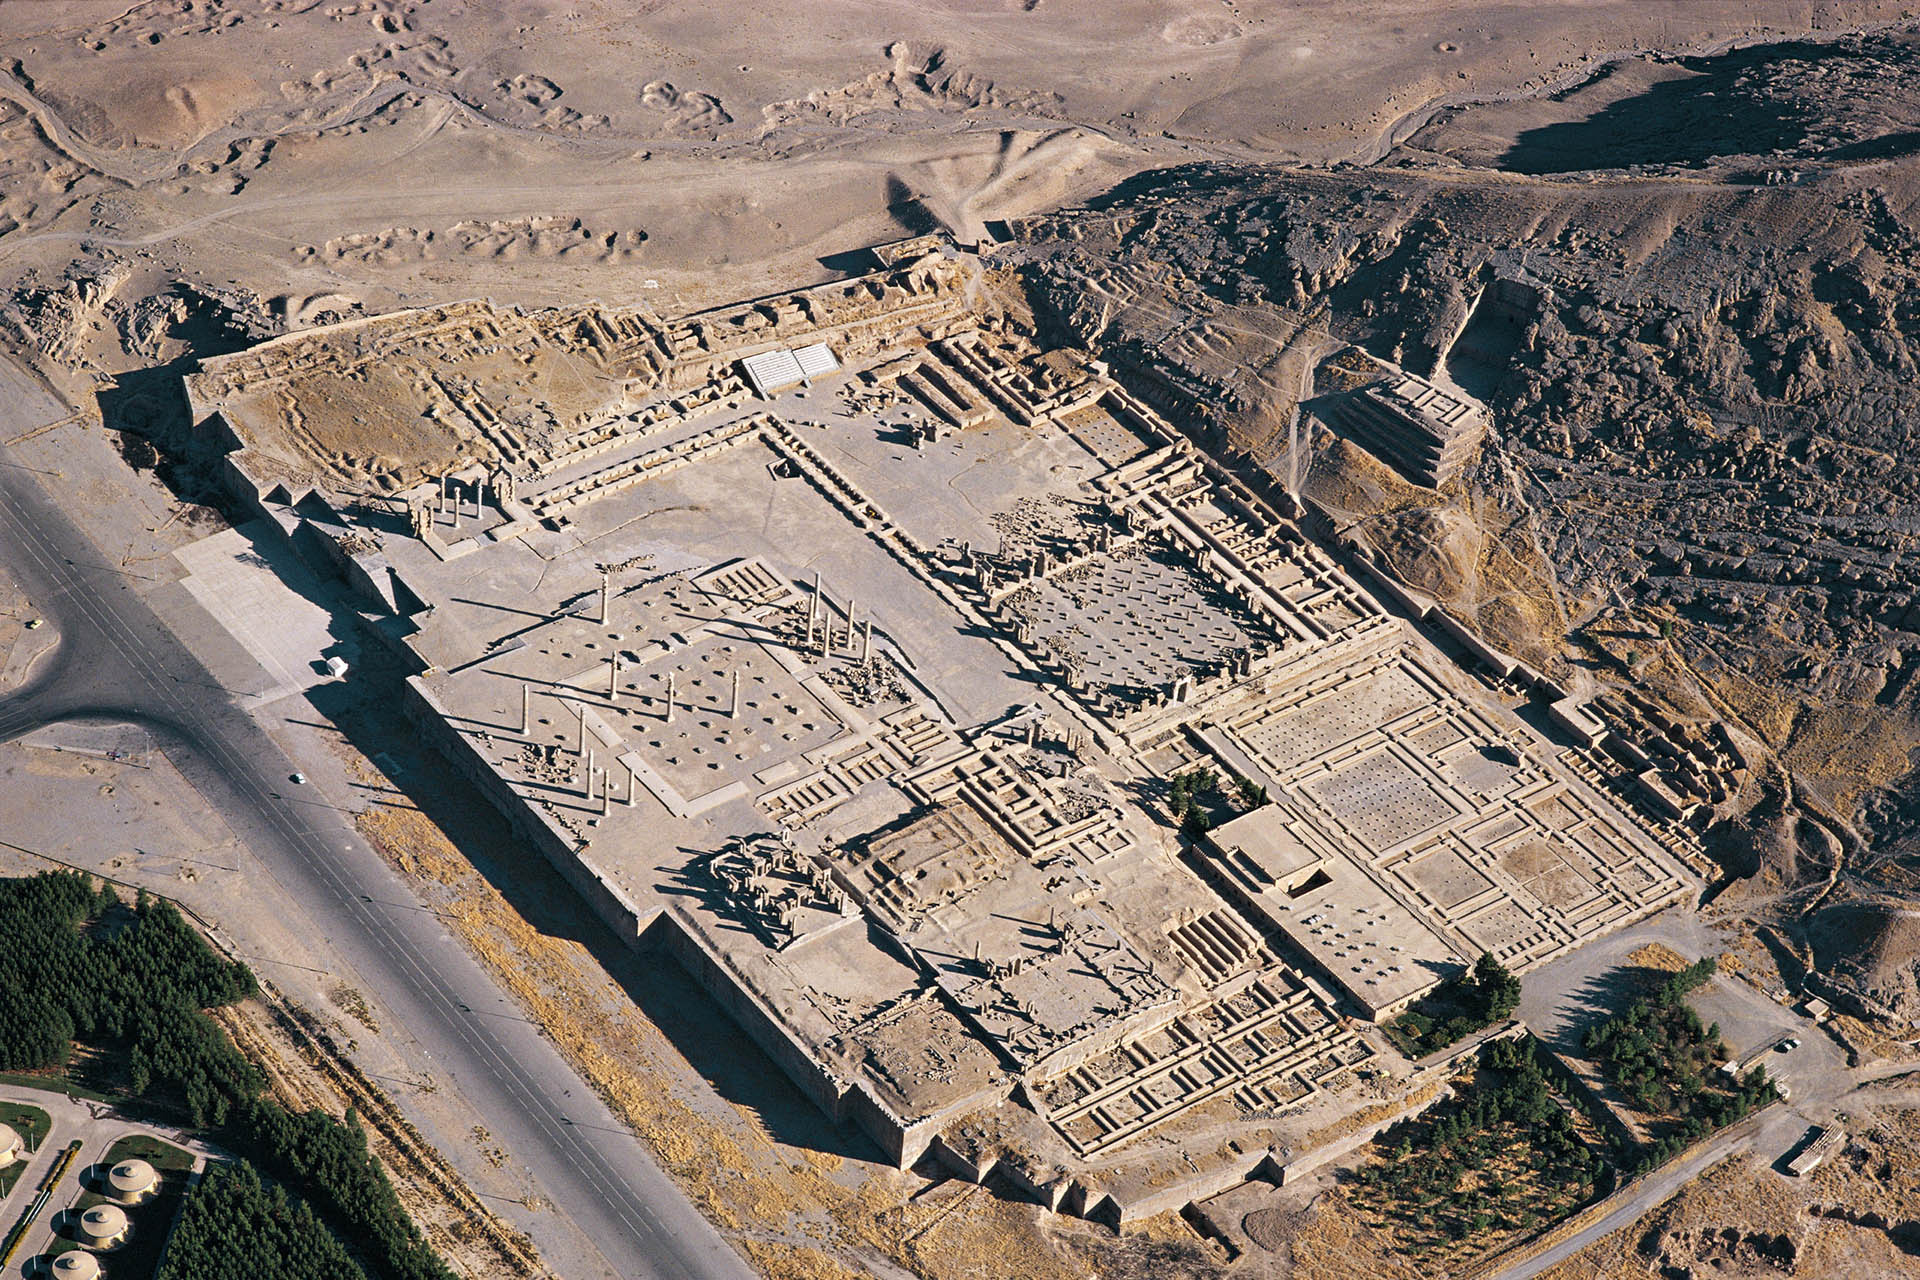 Aerial view of Persepolis